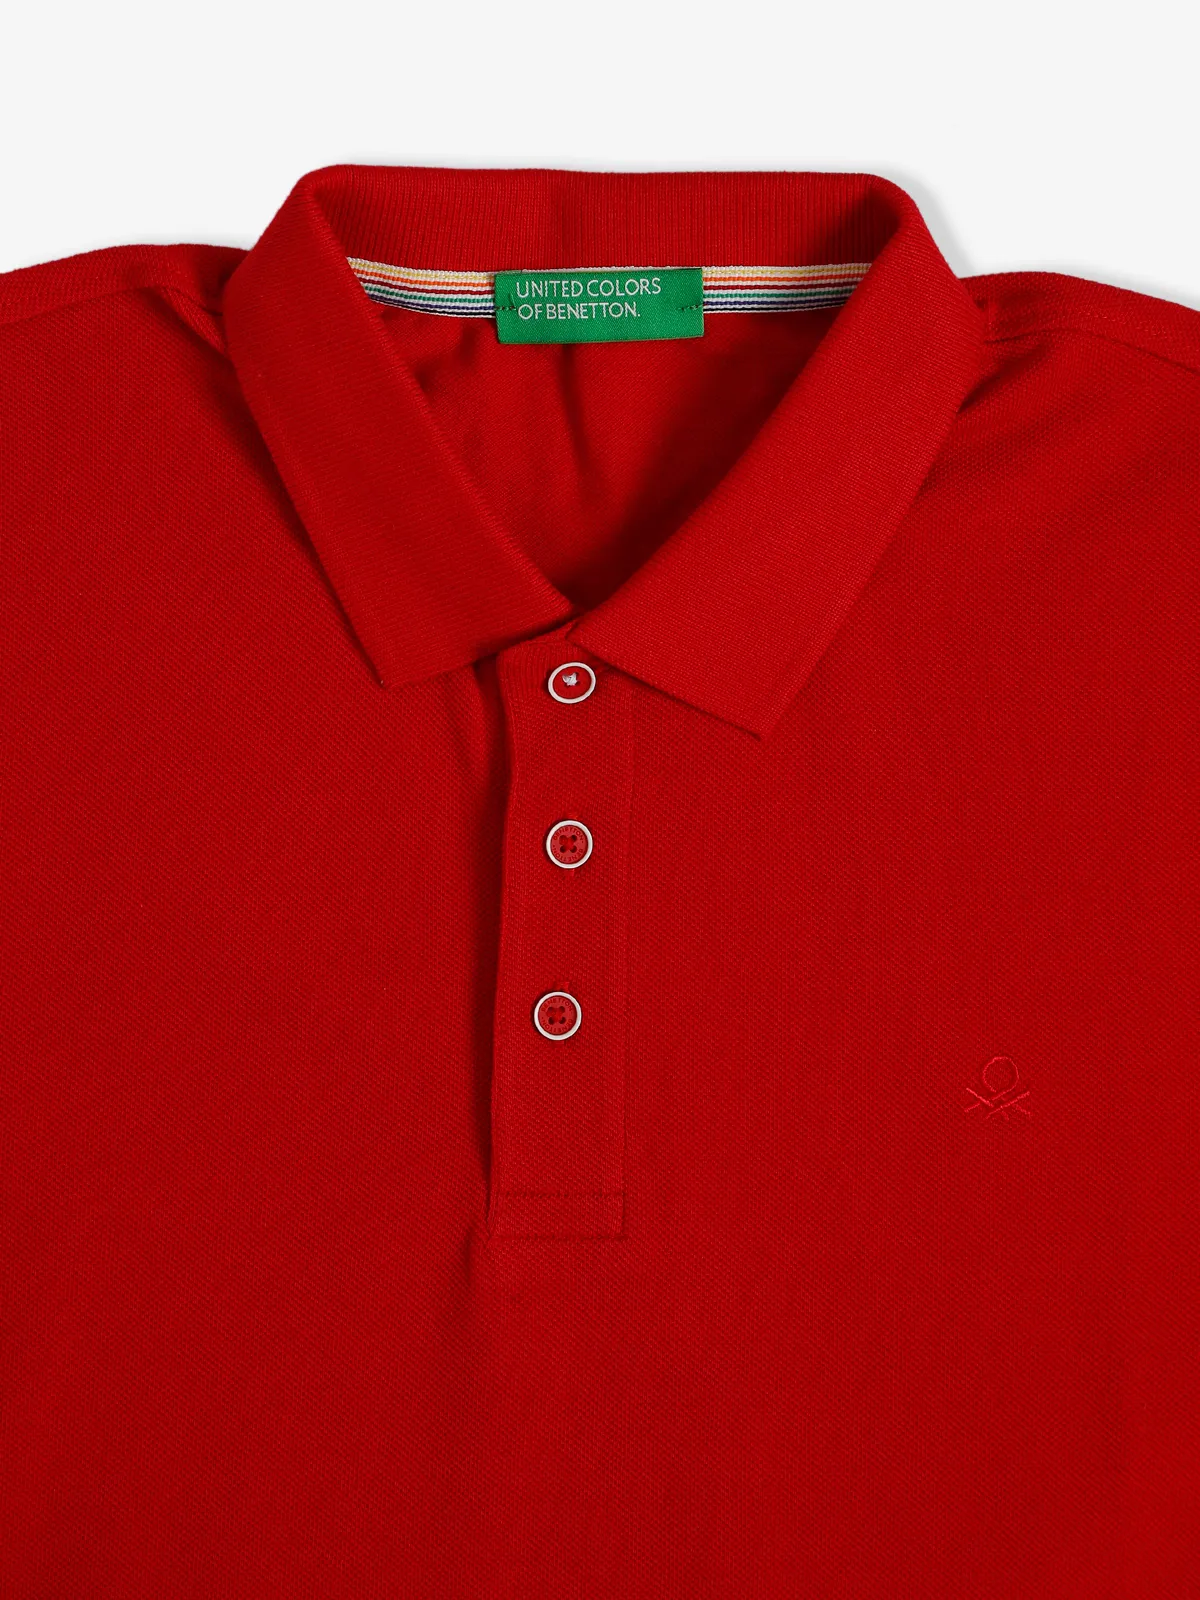 UCB plain cotton red t shirt